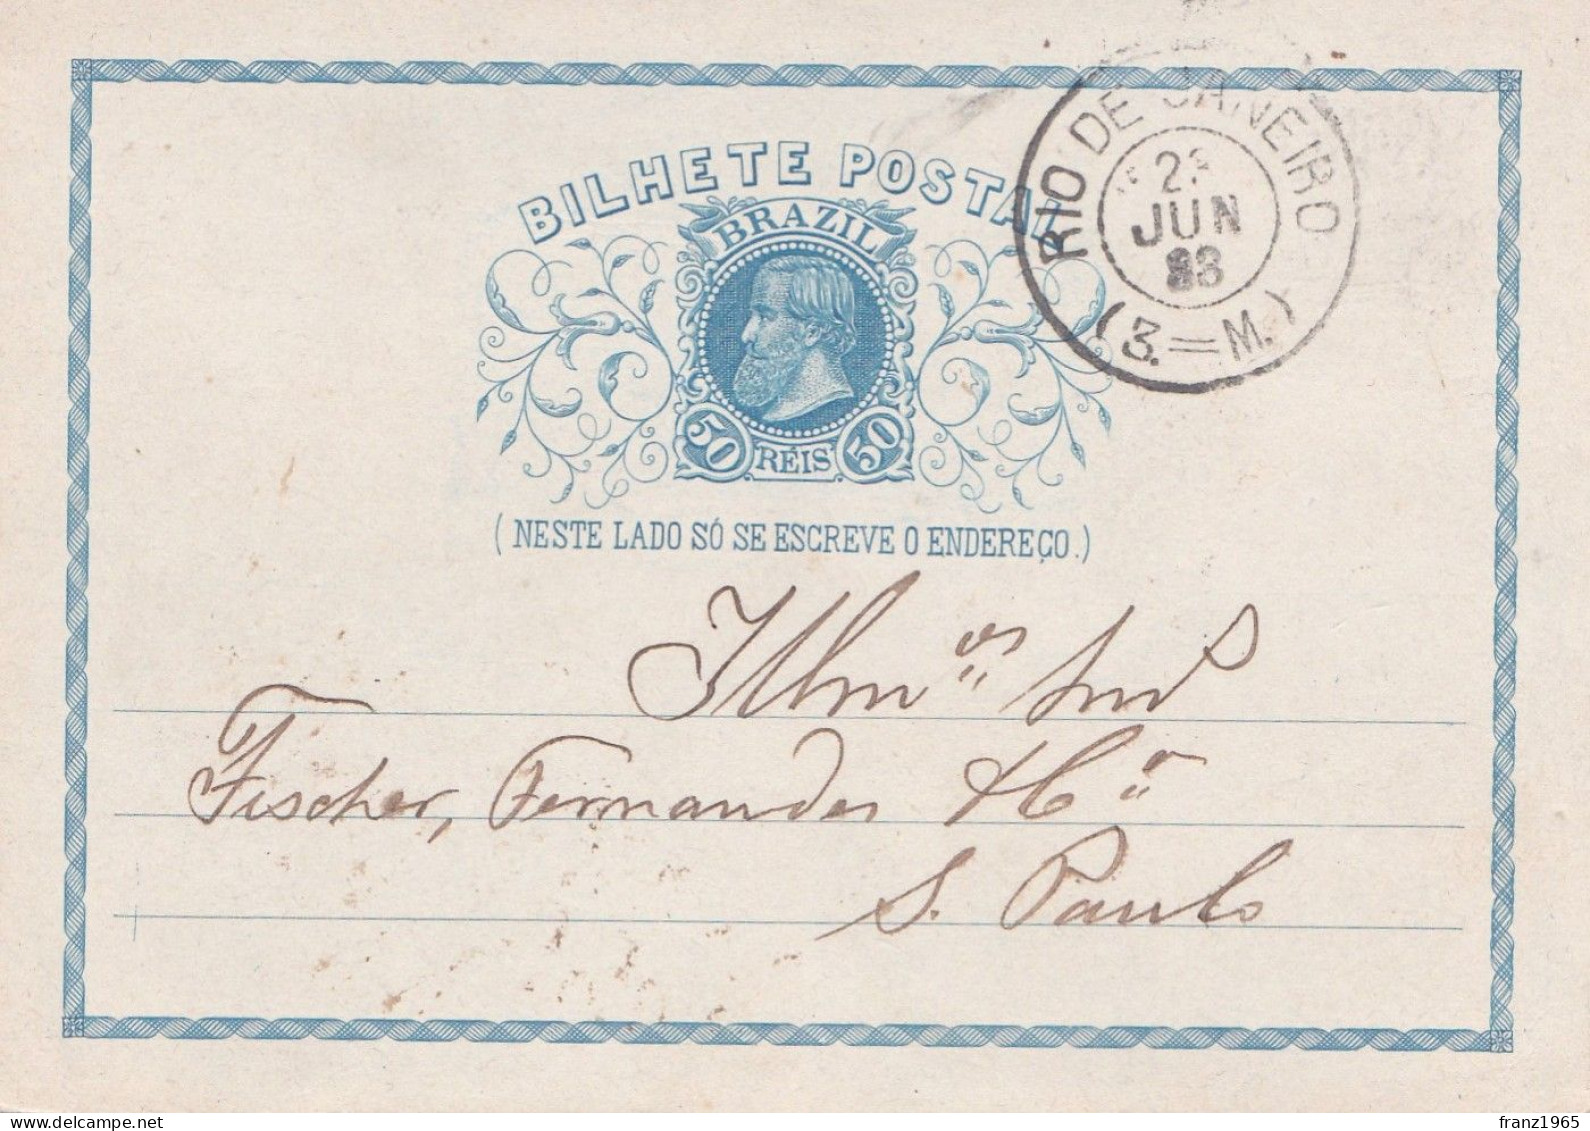 Bilhete Postal - Rio De Janeiro - 1883 - Storia Postale